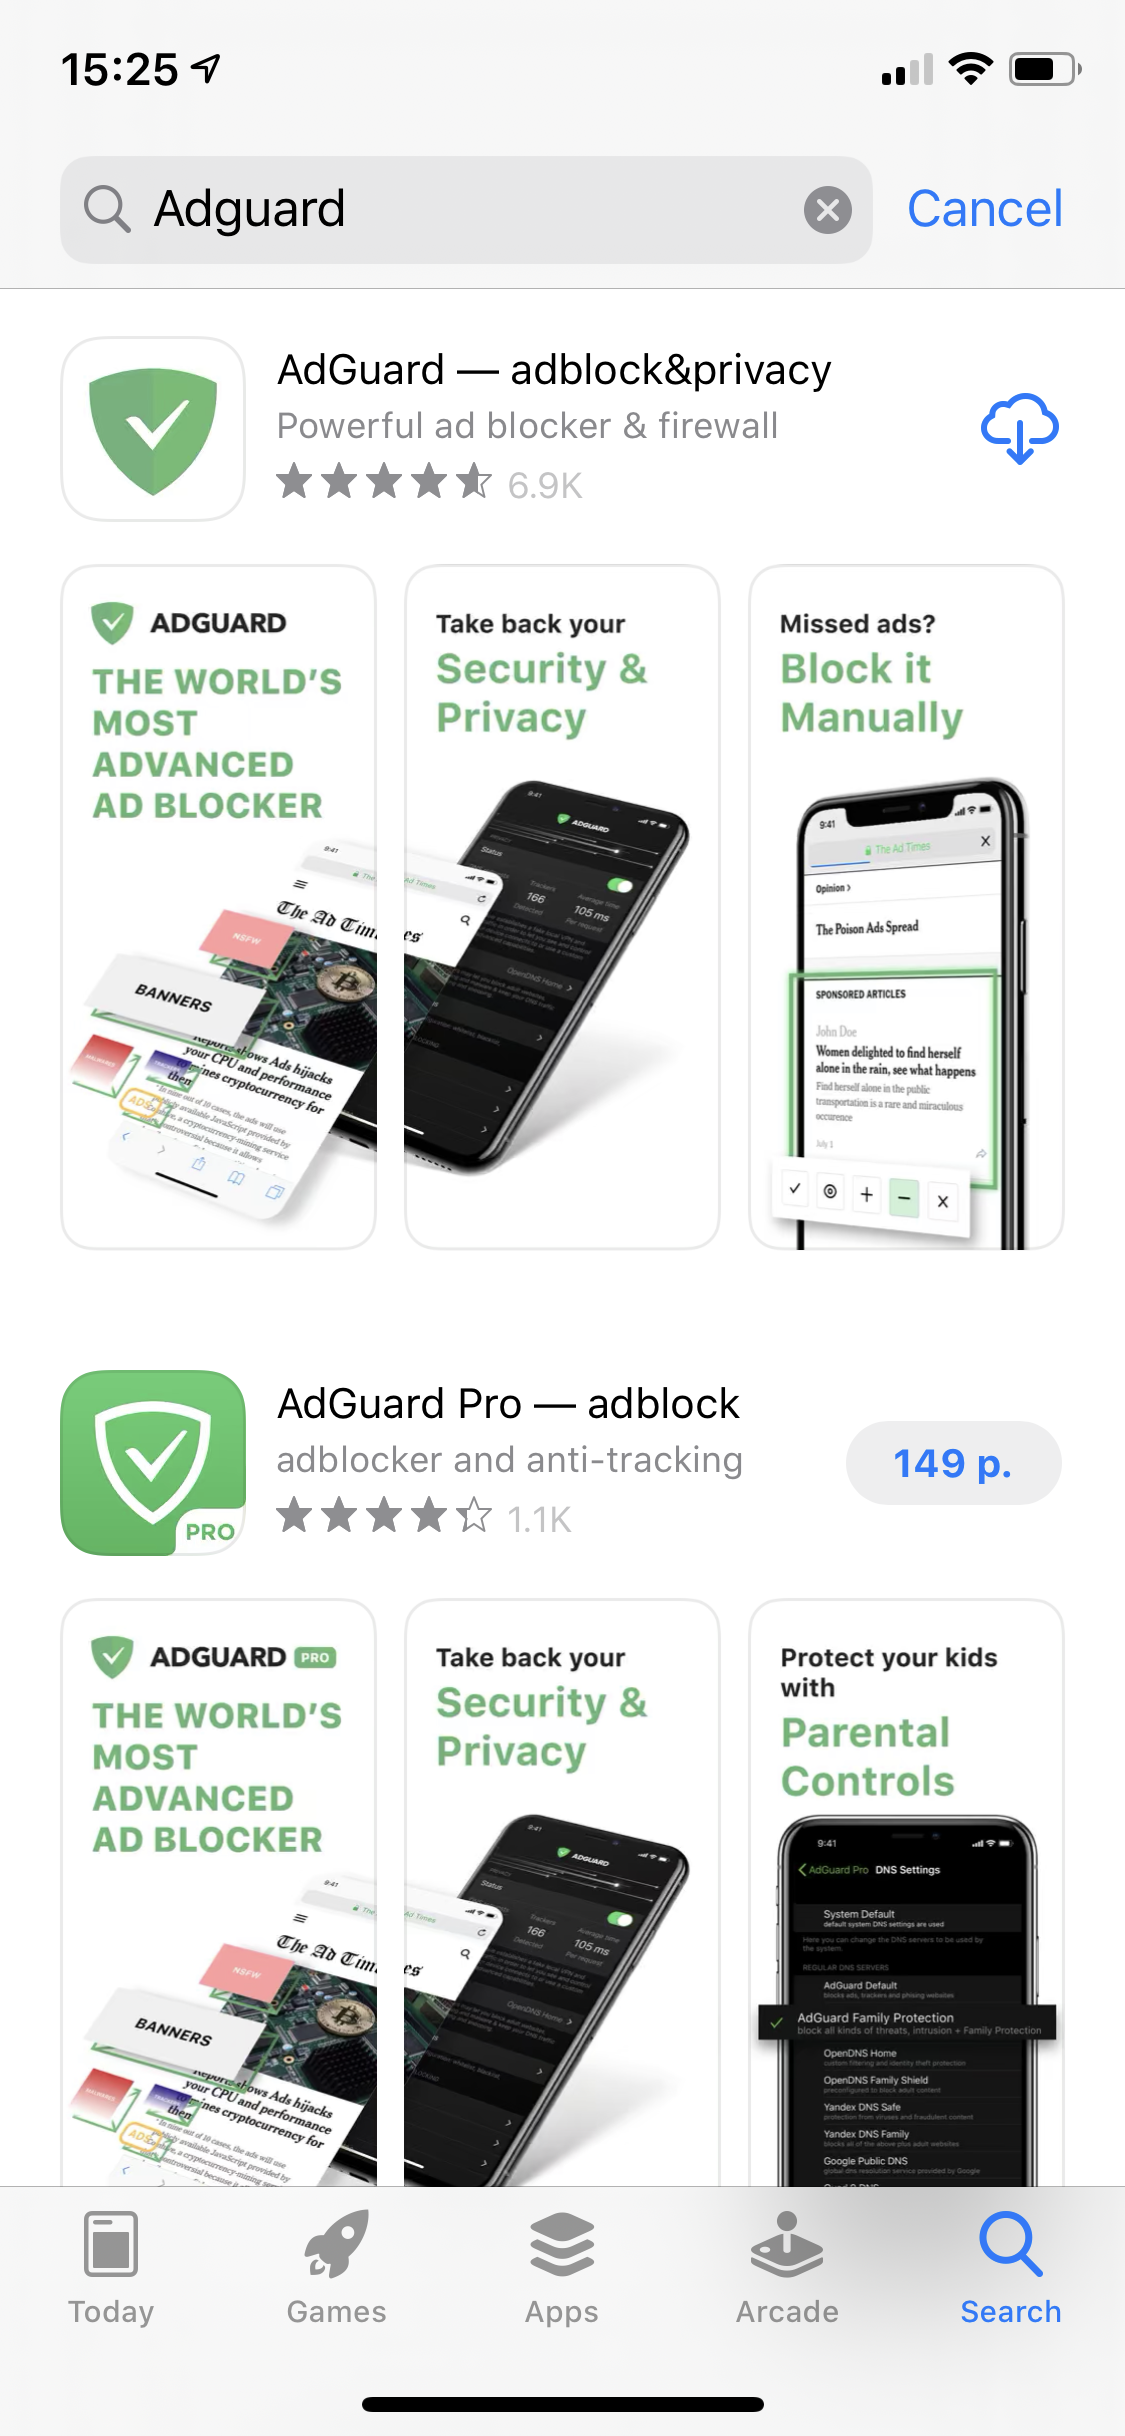 Tap GET below the AdGuard app *mobile_border